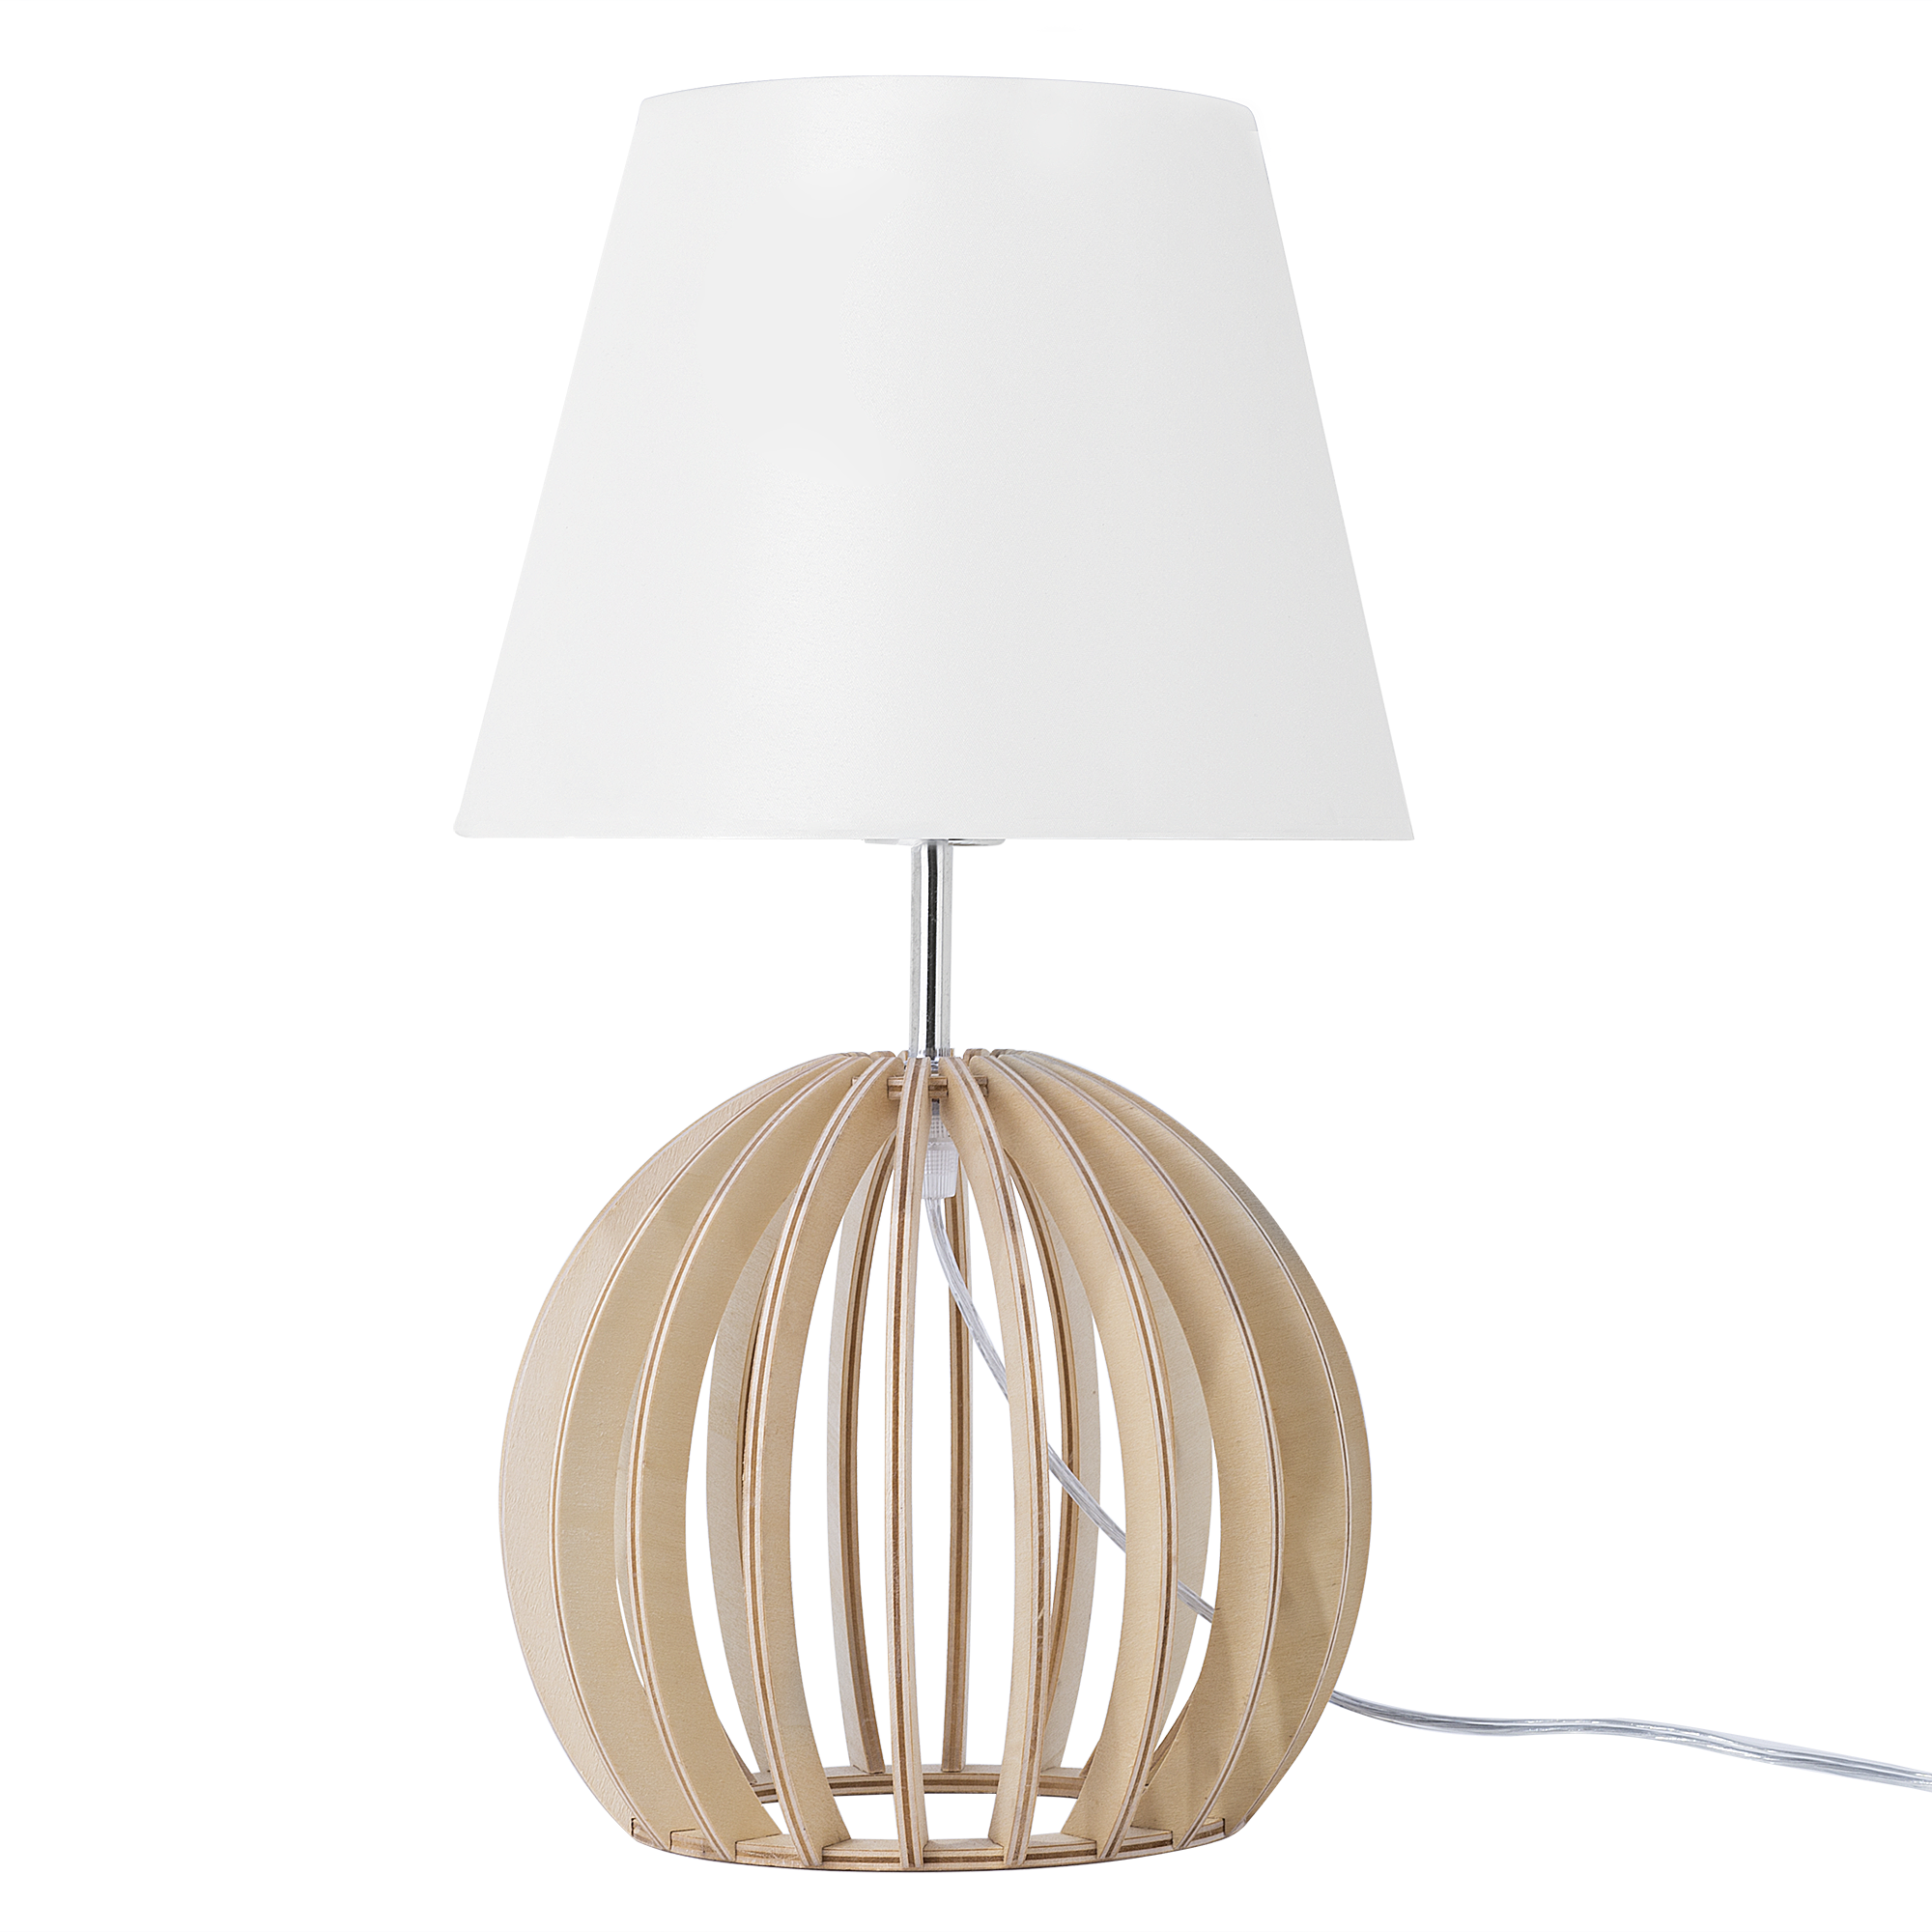 Beliani Table Lamp Round Light Wood Base White Fabric Lampshade Modern